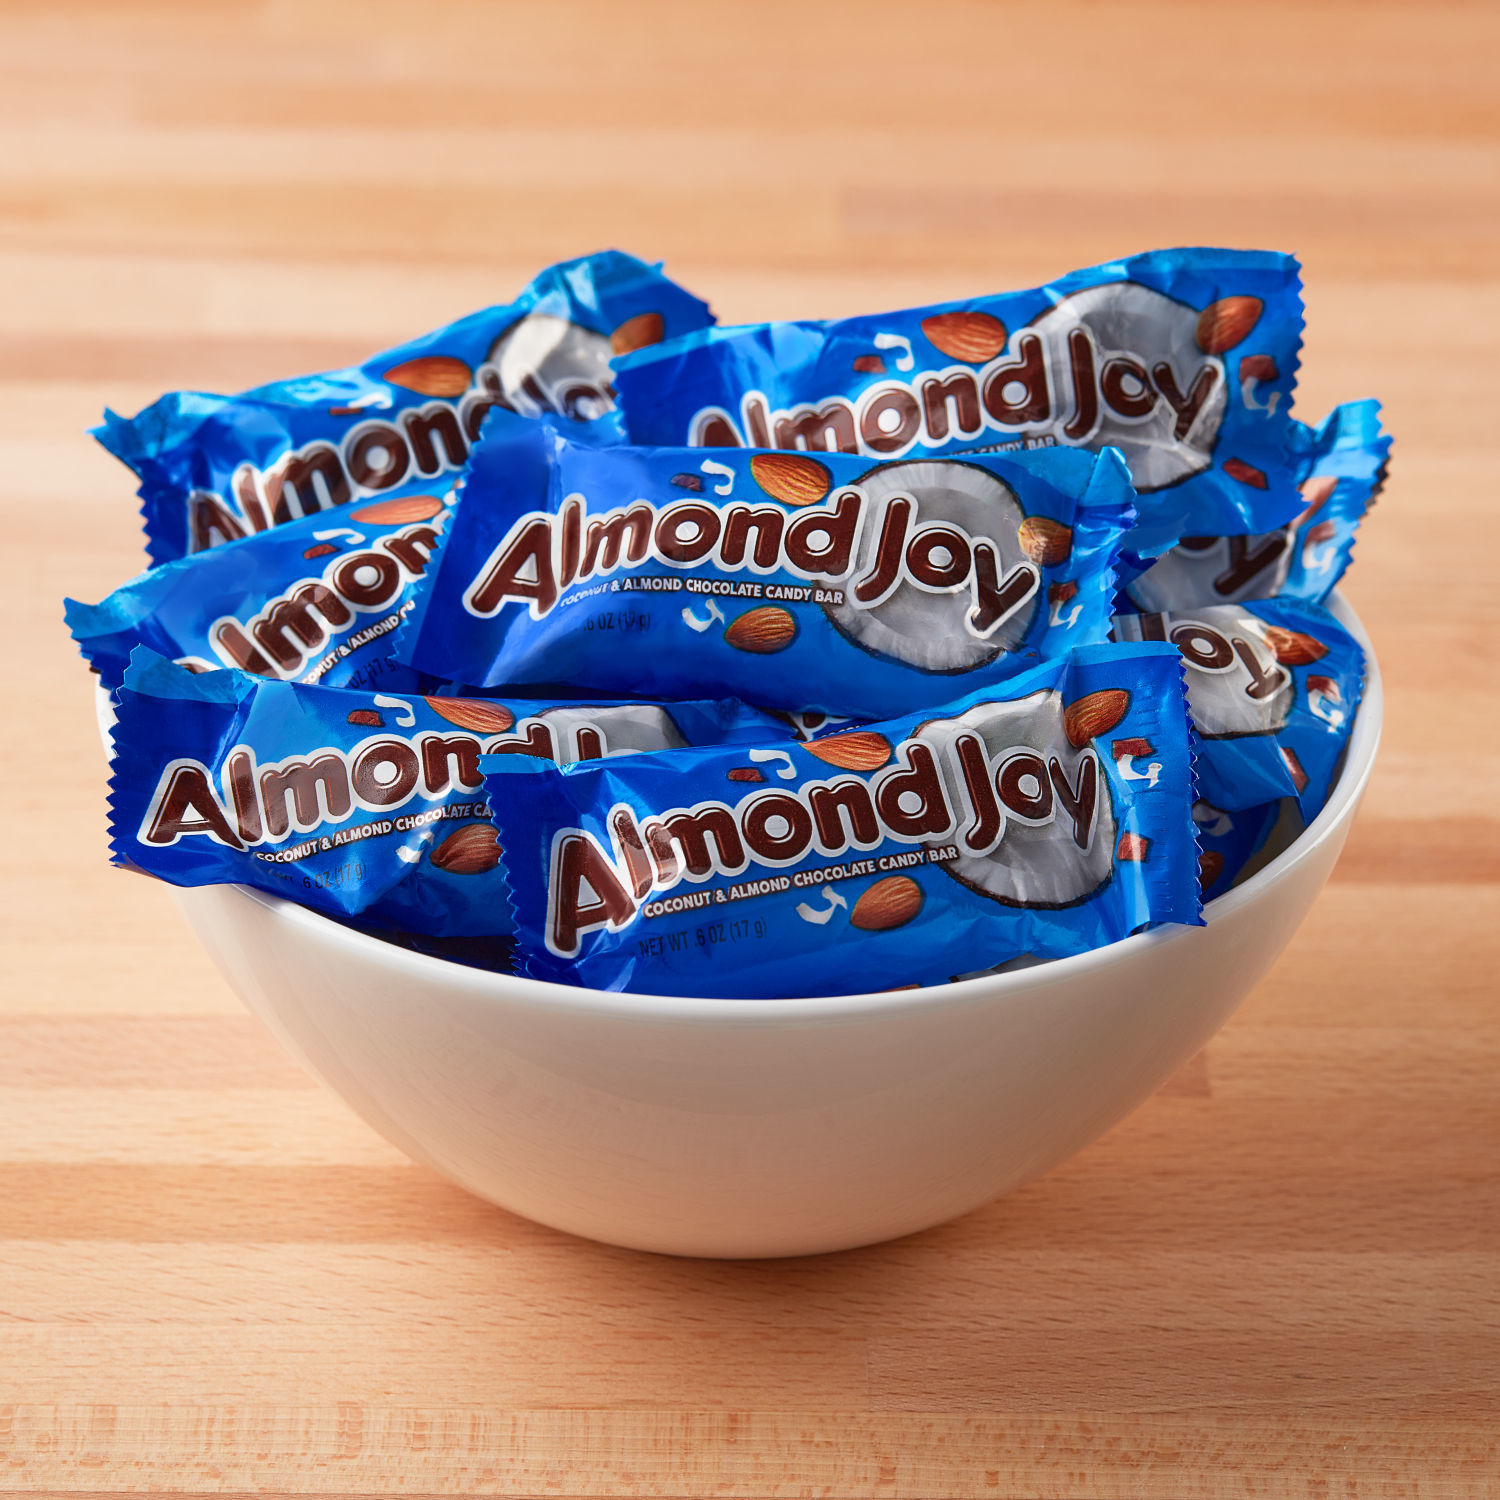 Almond Joy Coconut and Almond Chocolate Snack Size Candy, Jumbo Bag 20.1 oz - image 3 of 7